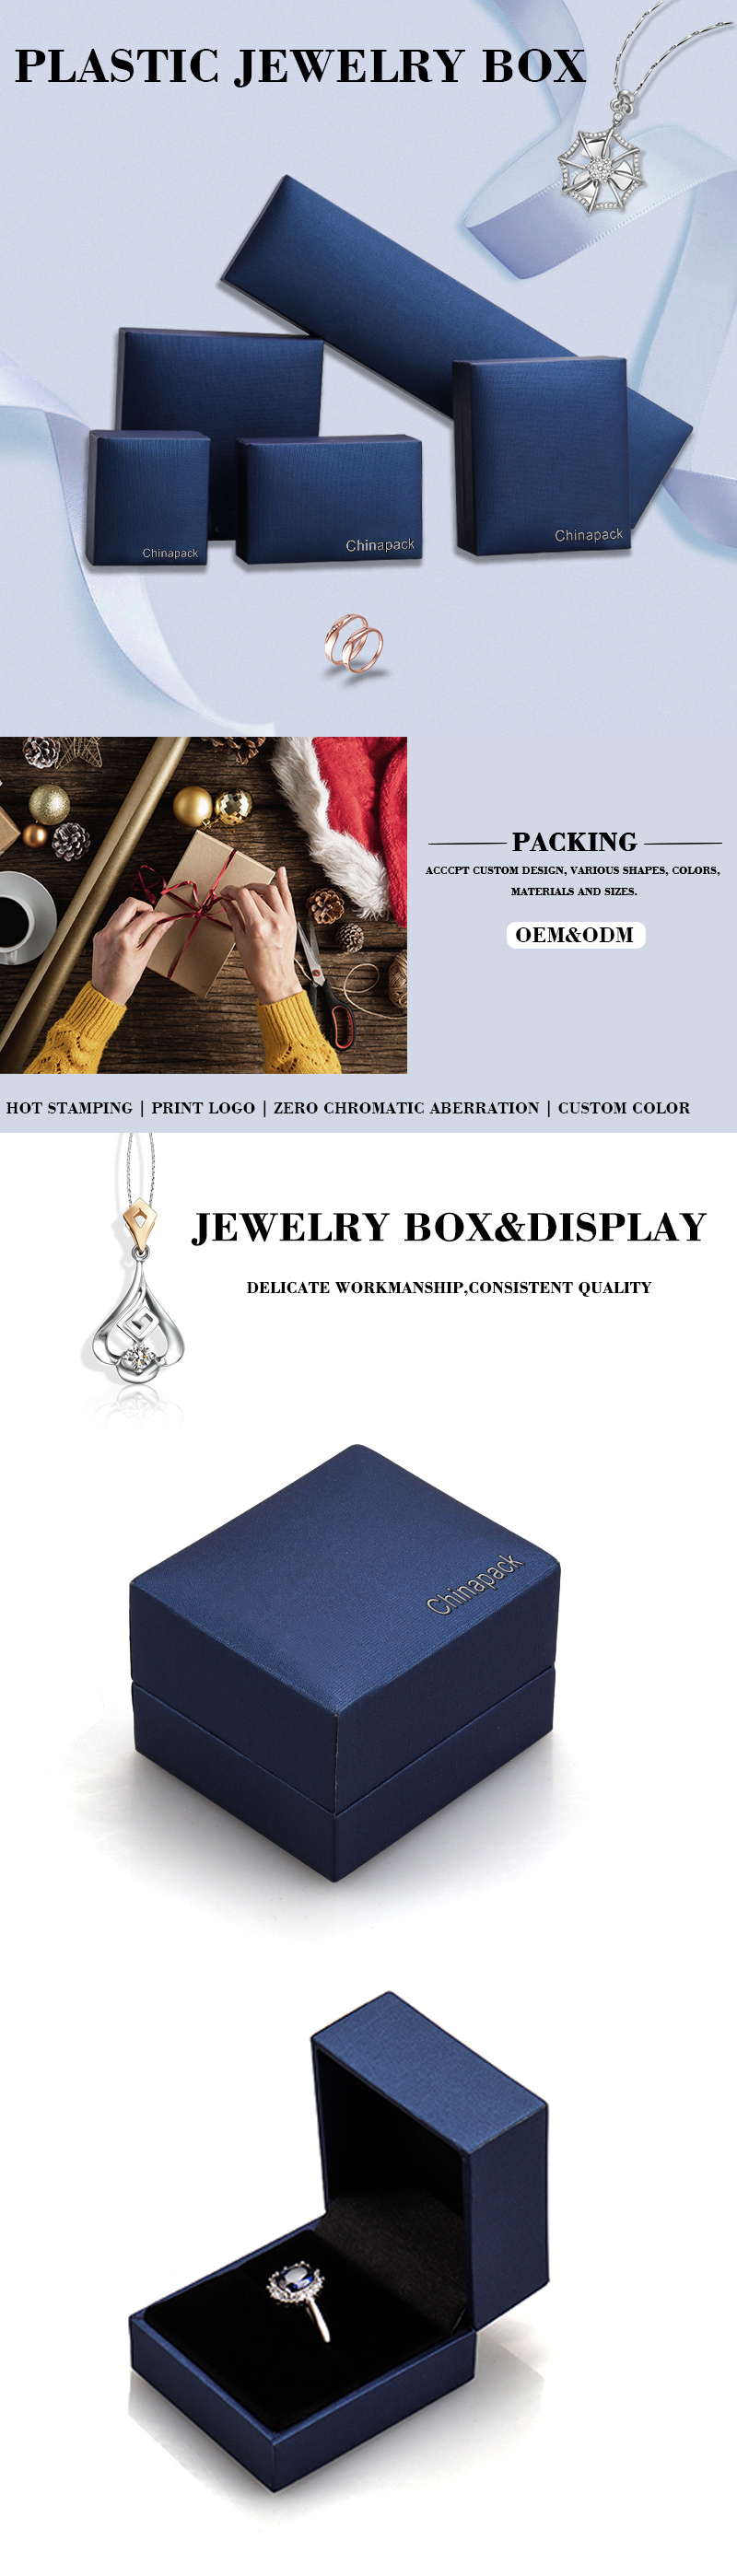 Unique jewellery boxes